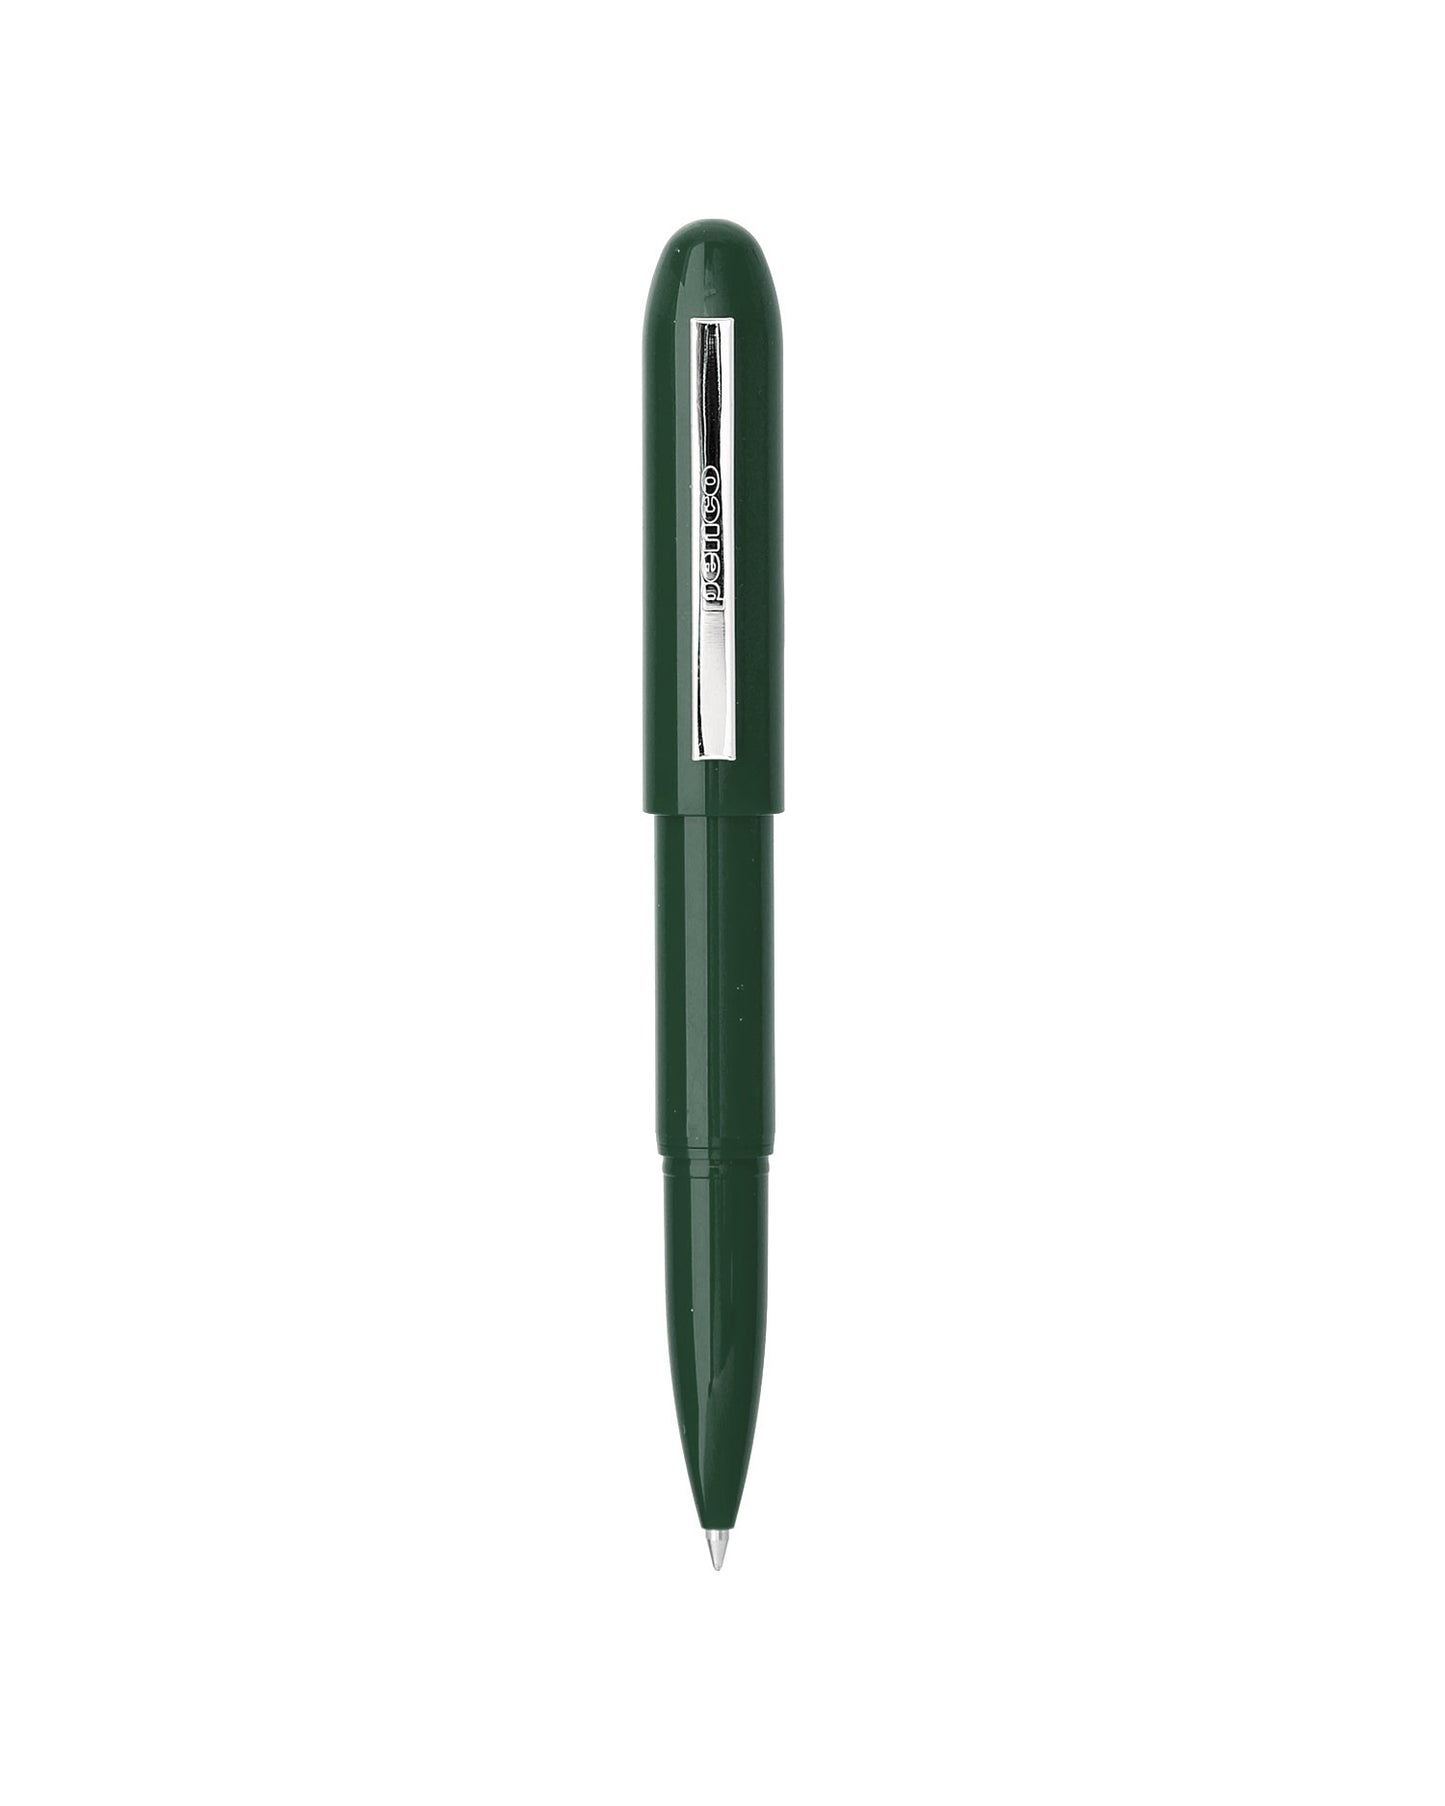 Dark green bullet pen, plastic, Penco brand.